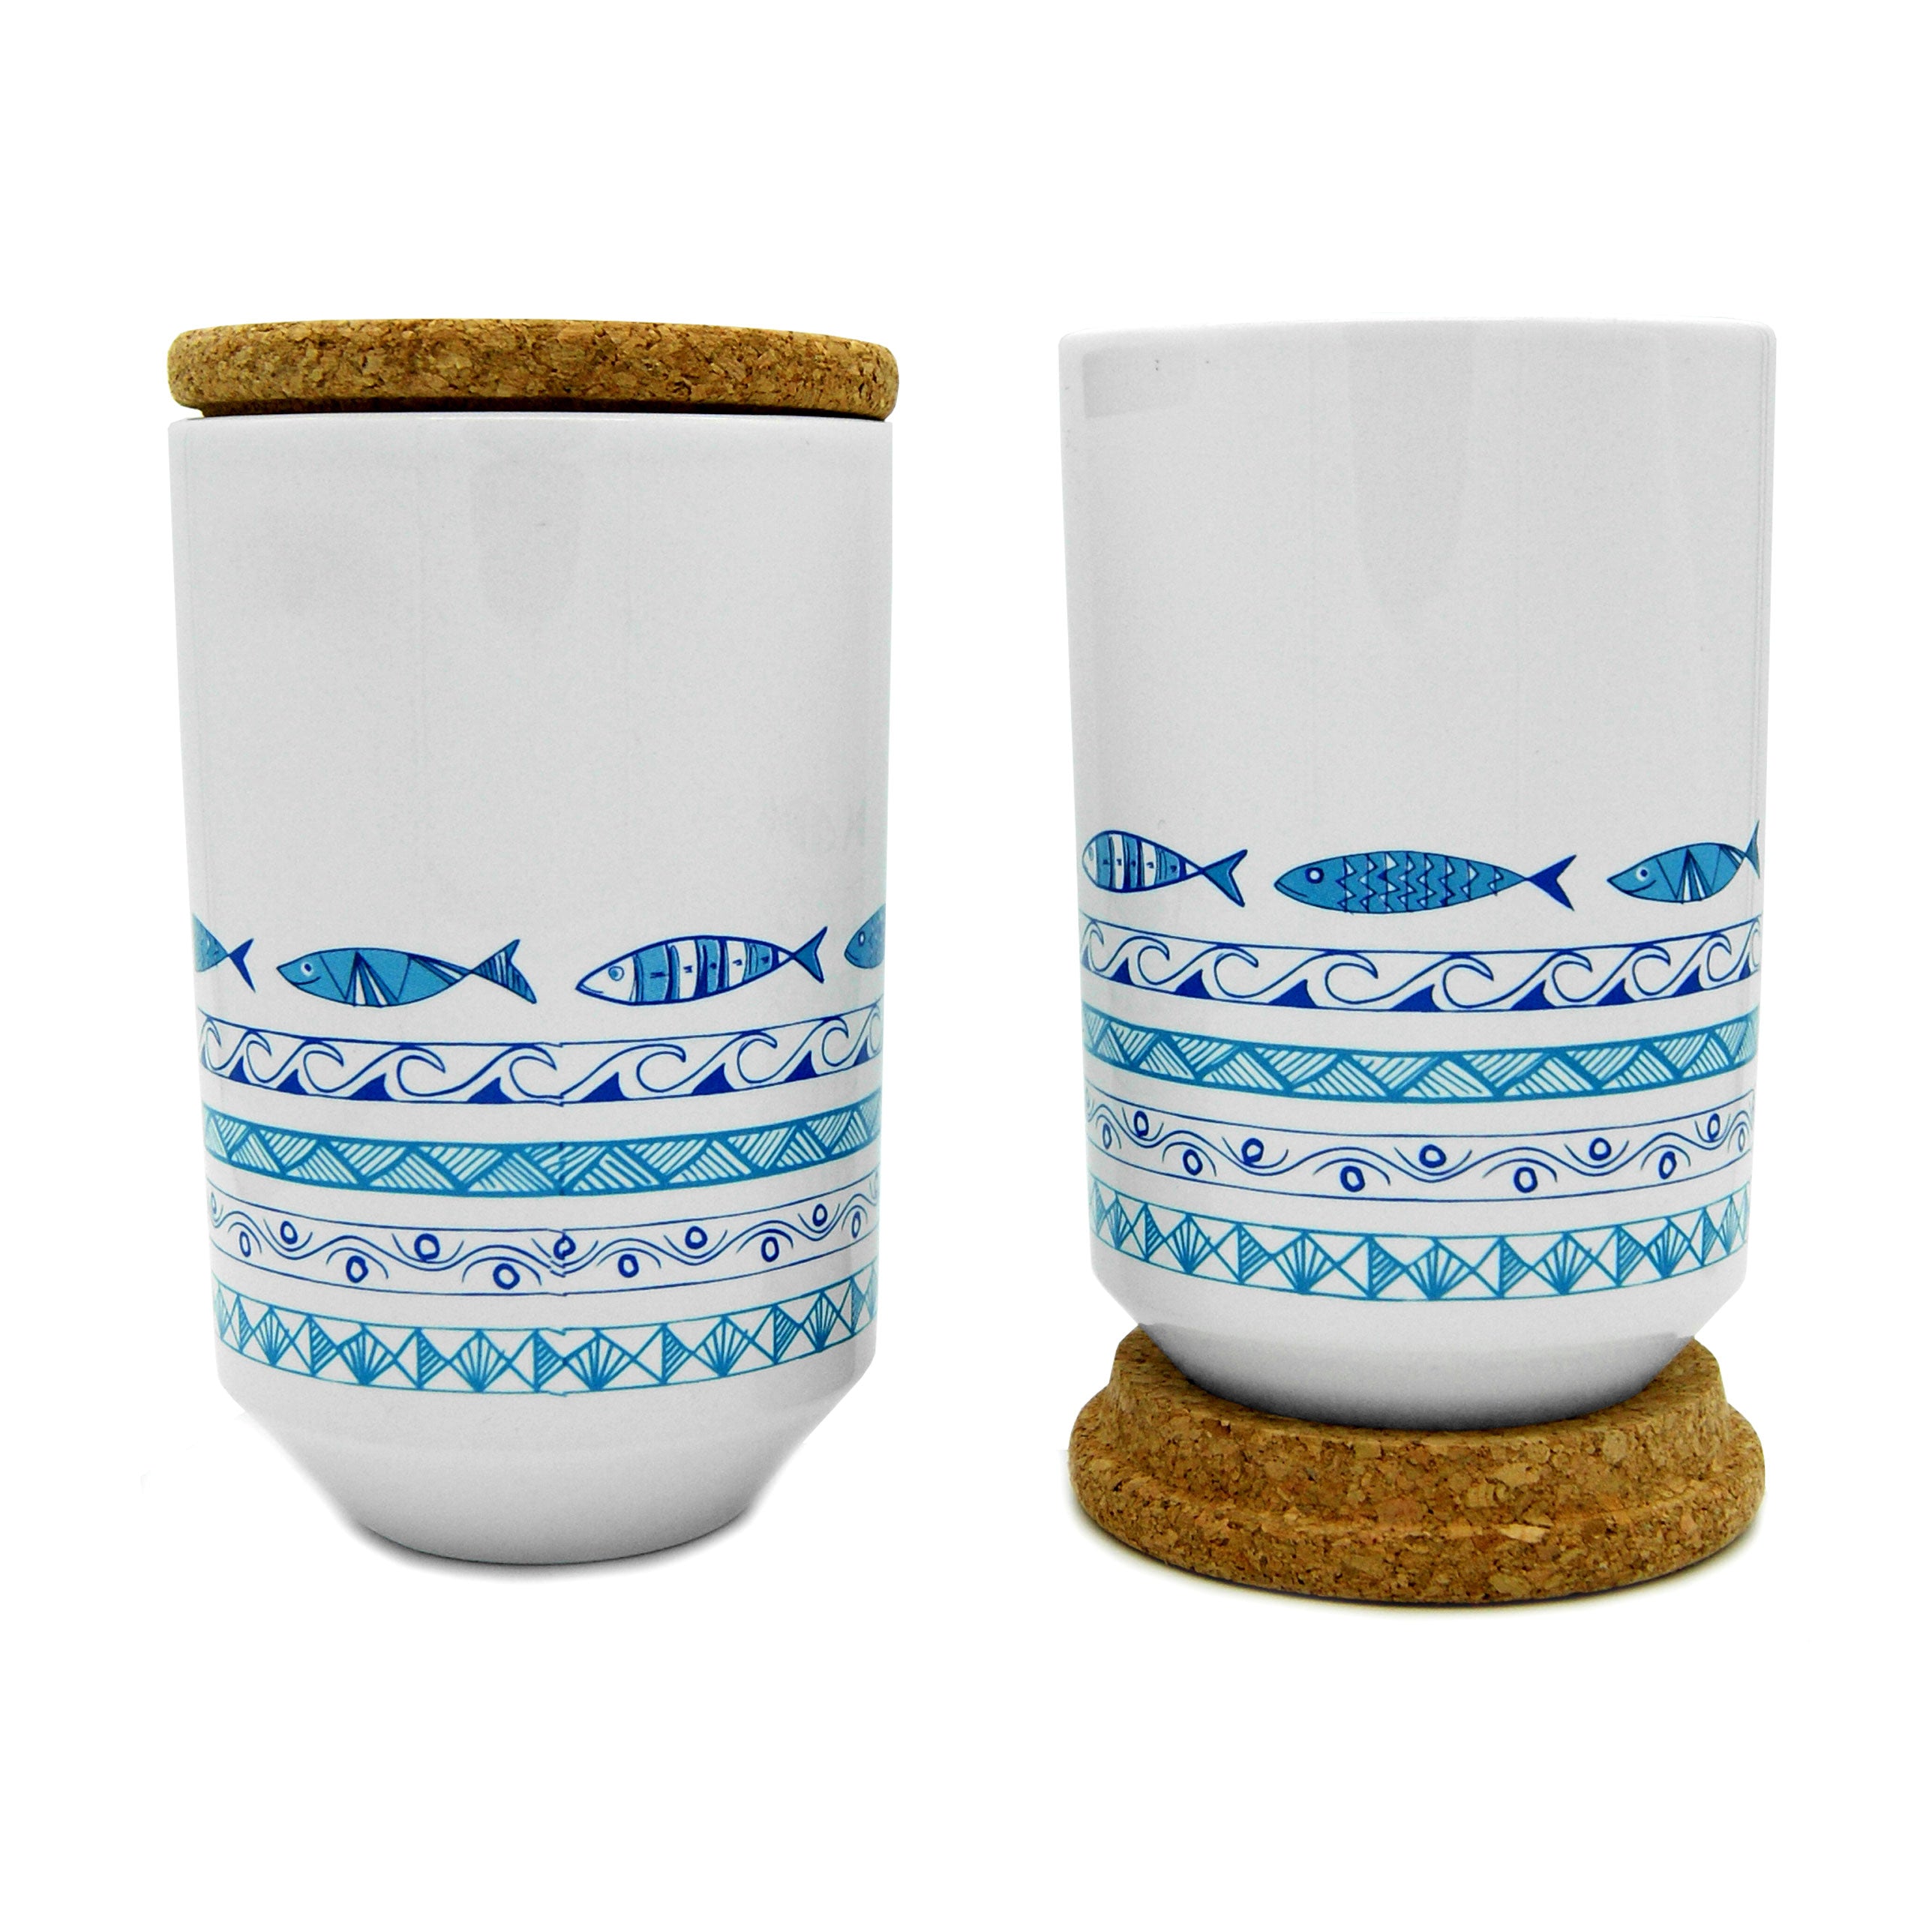 Traditional portuguese ceramics tea cups with cork lid.